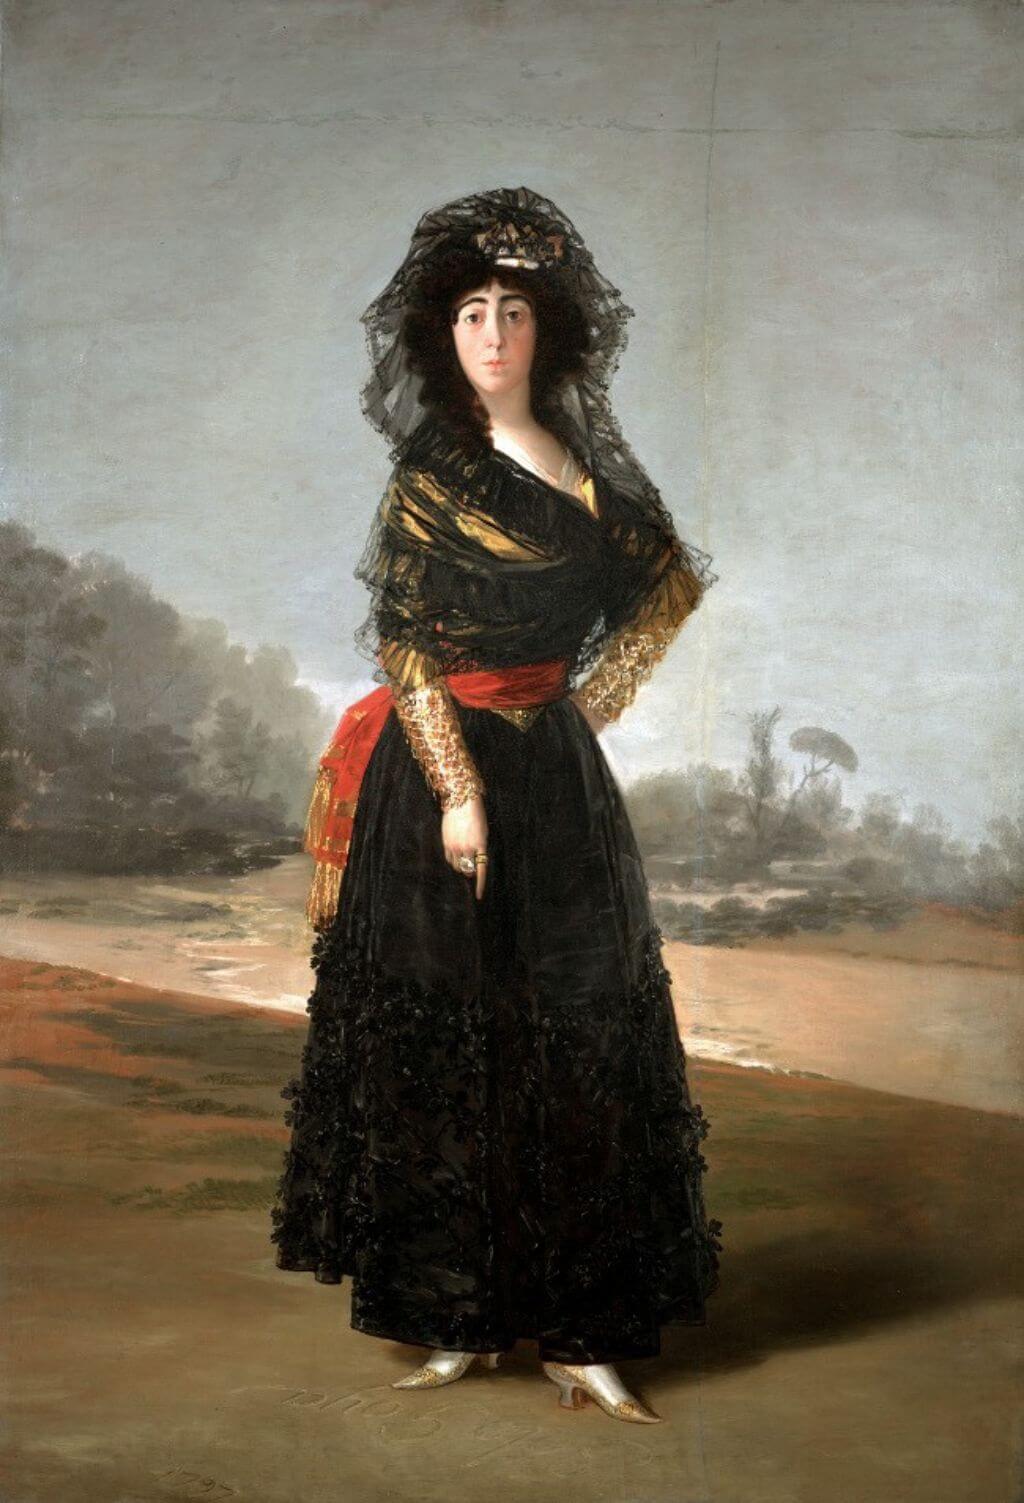 The Duchess of Alba (Alba Düşesi)